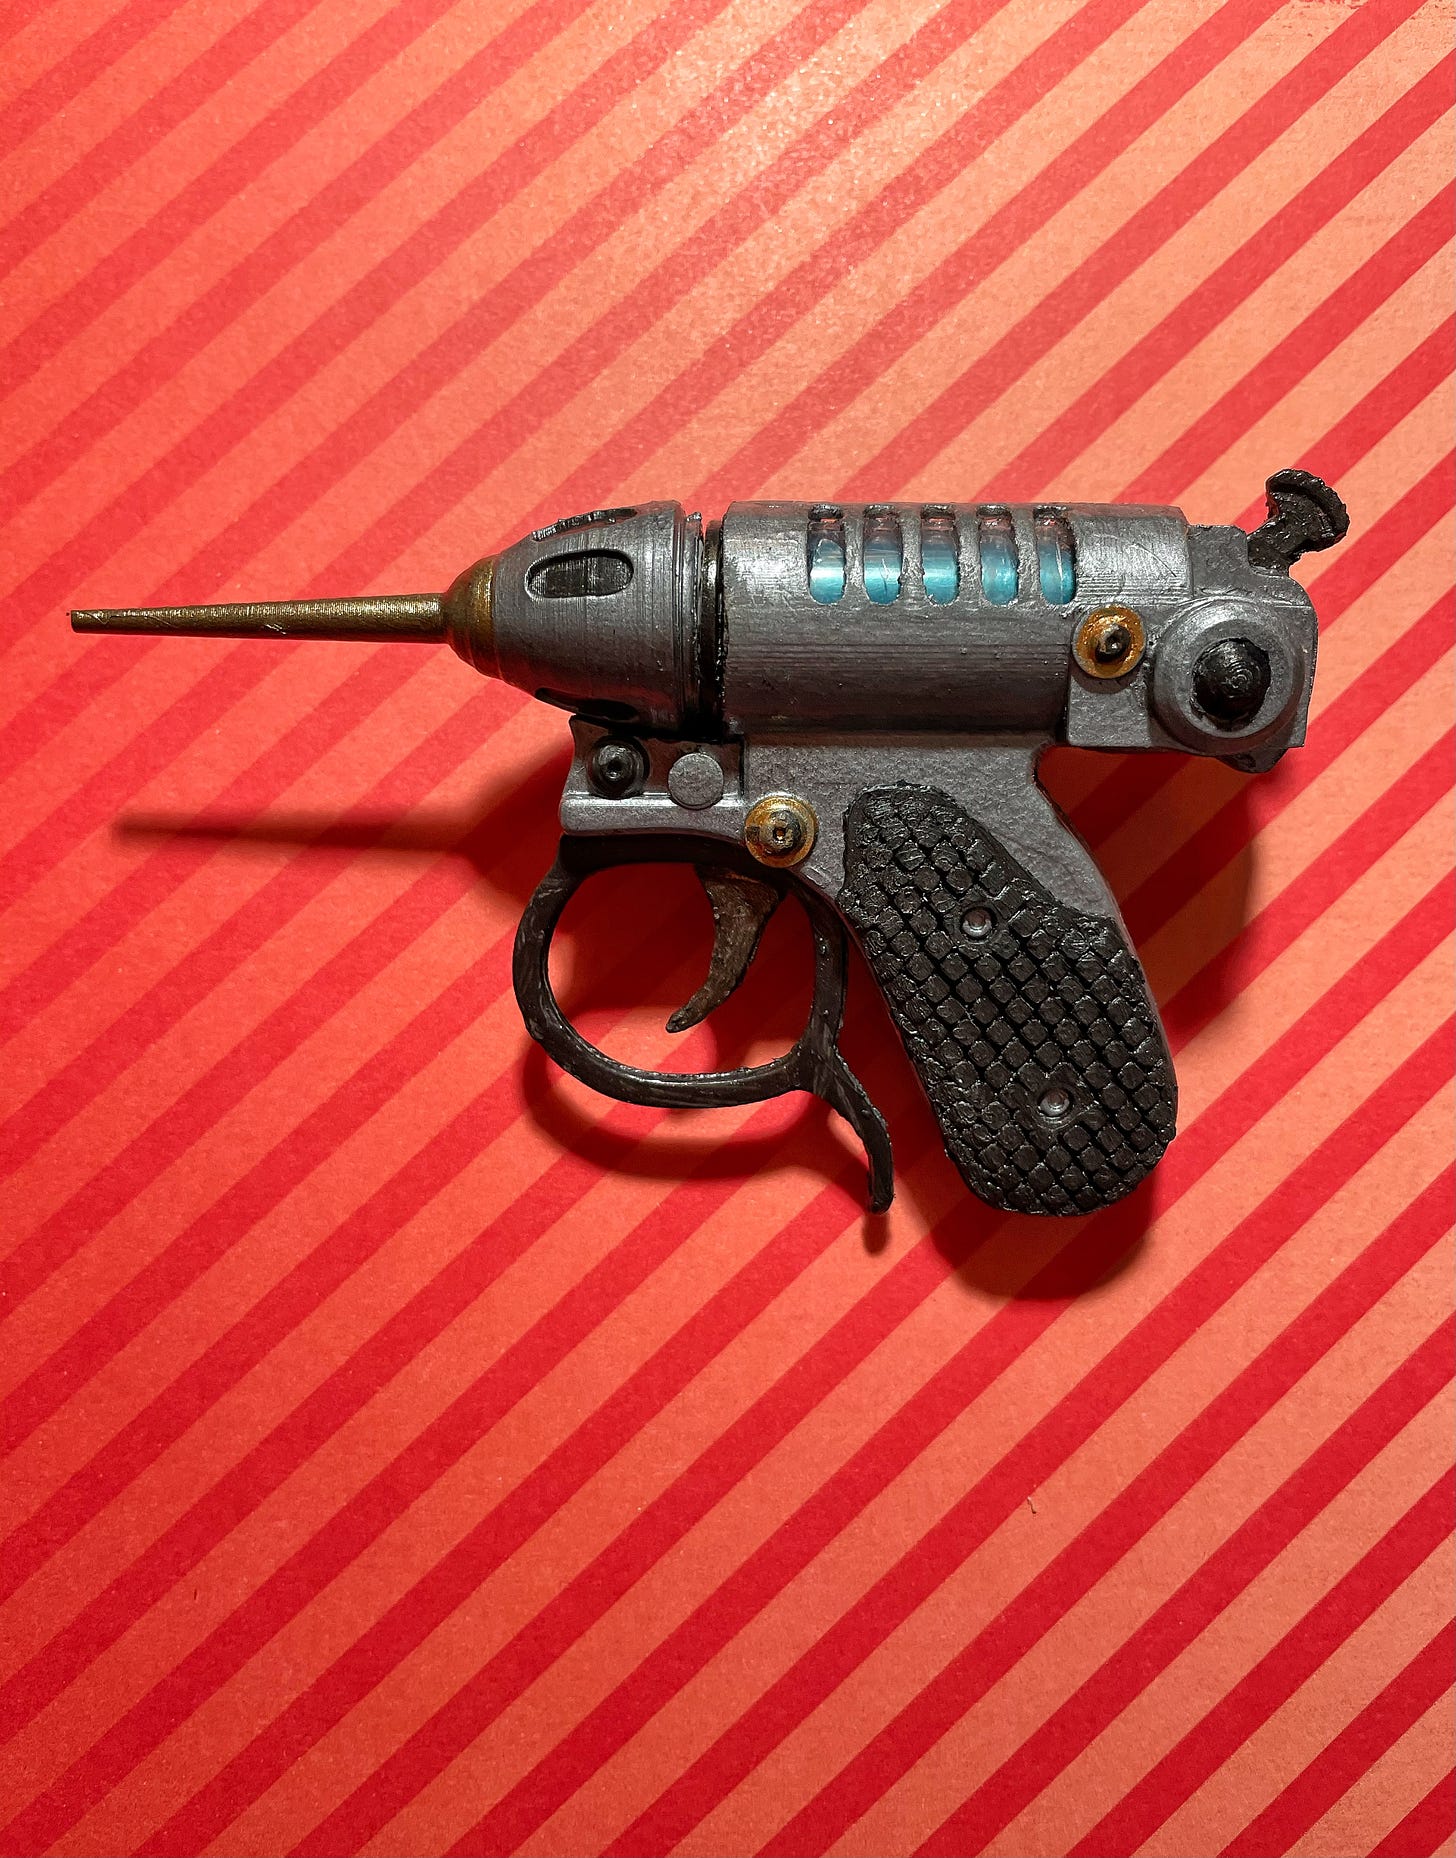 3D printed gun on striped background.